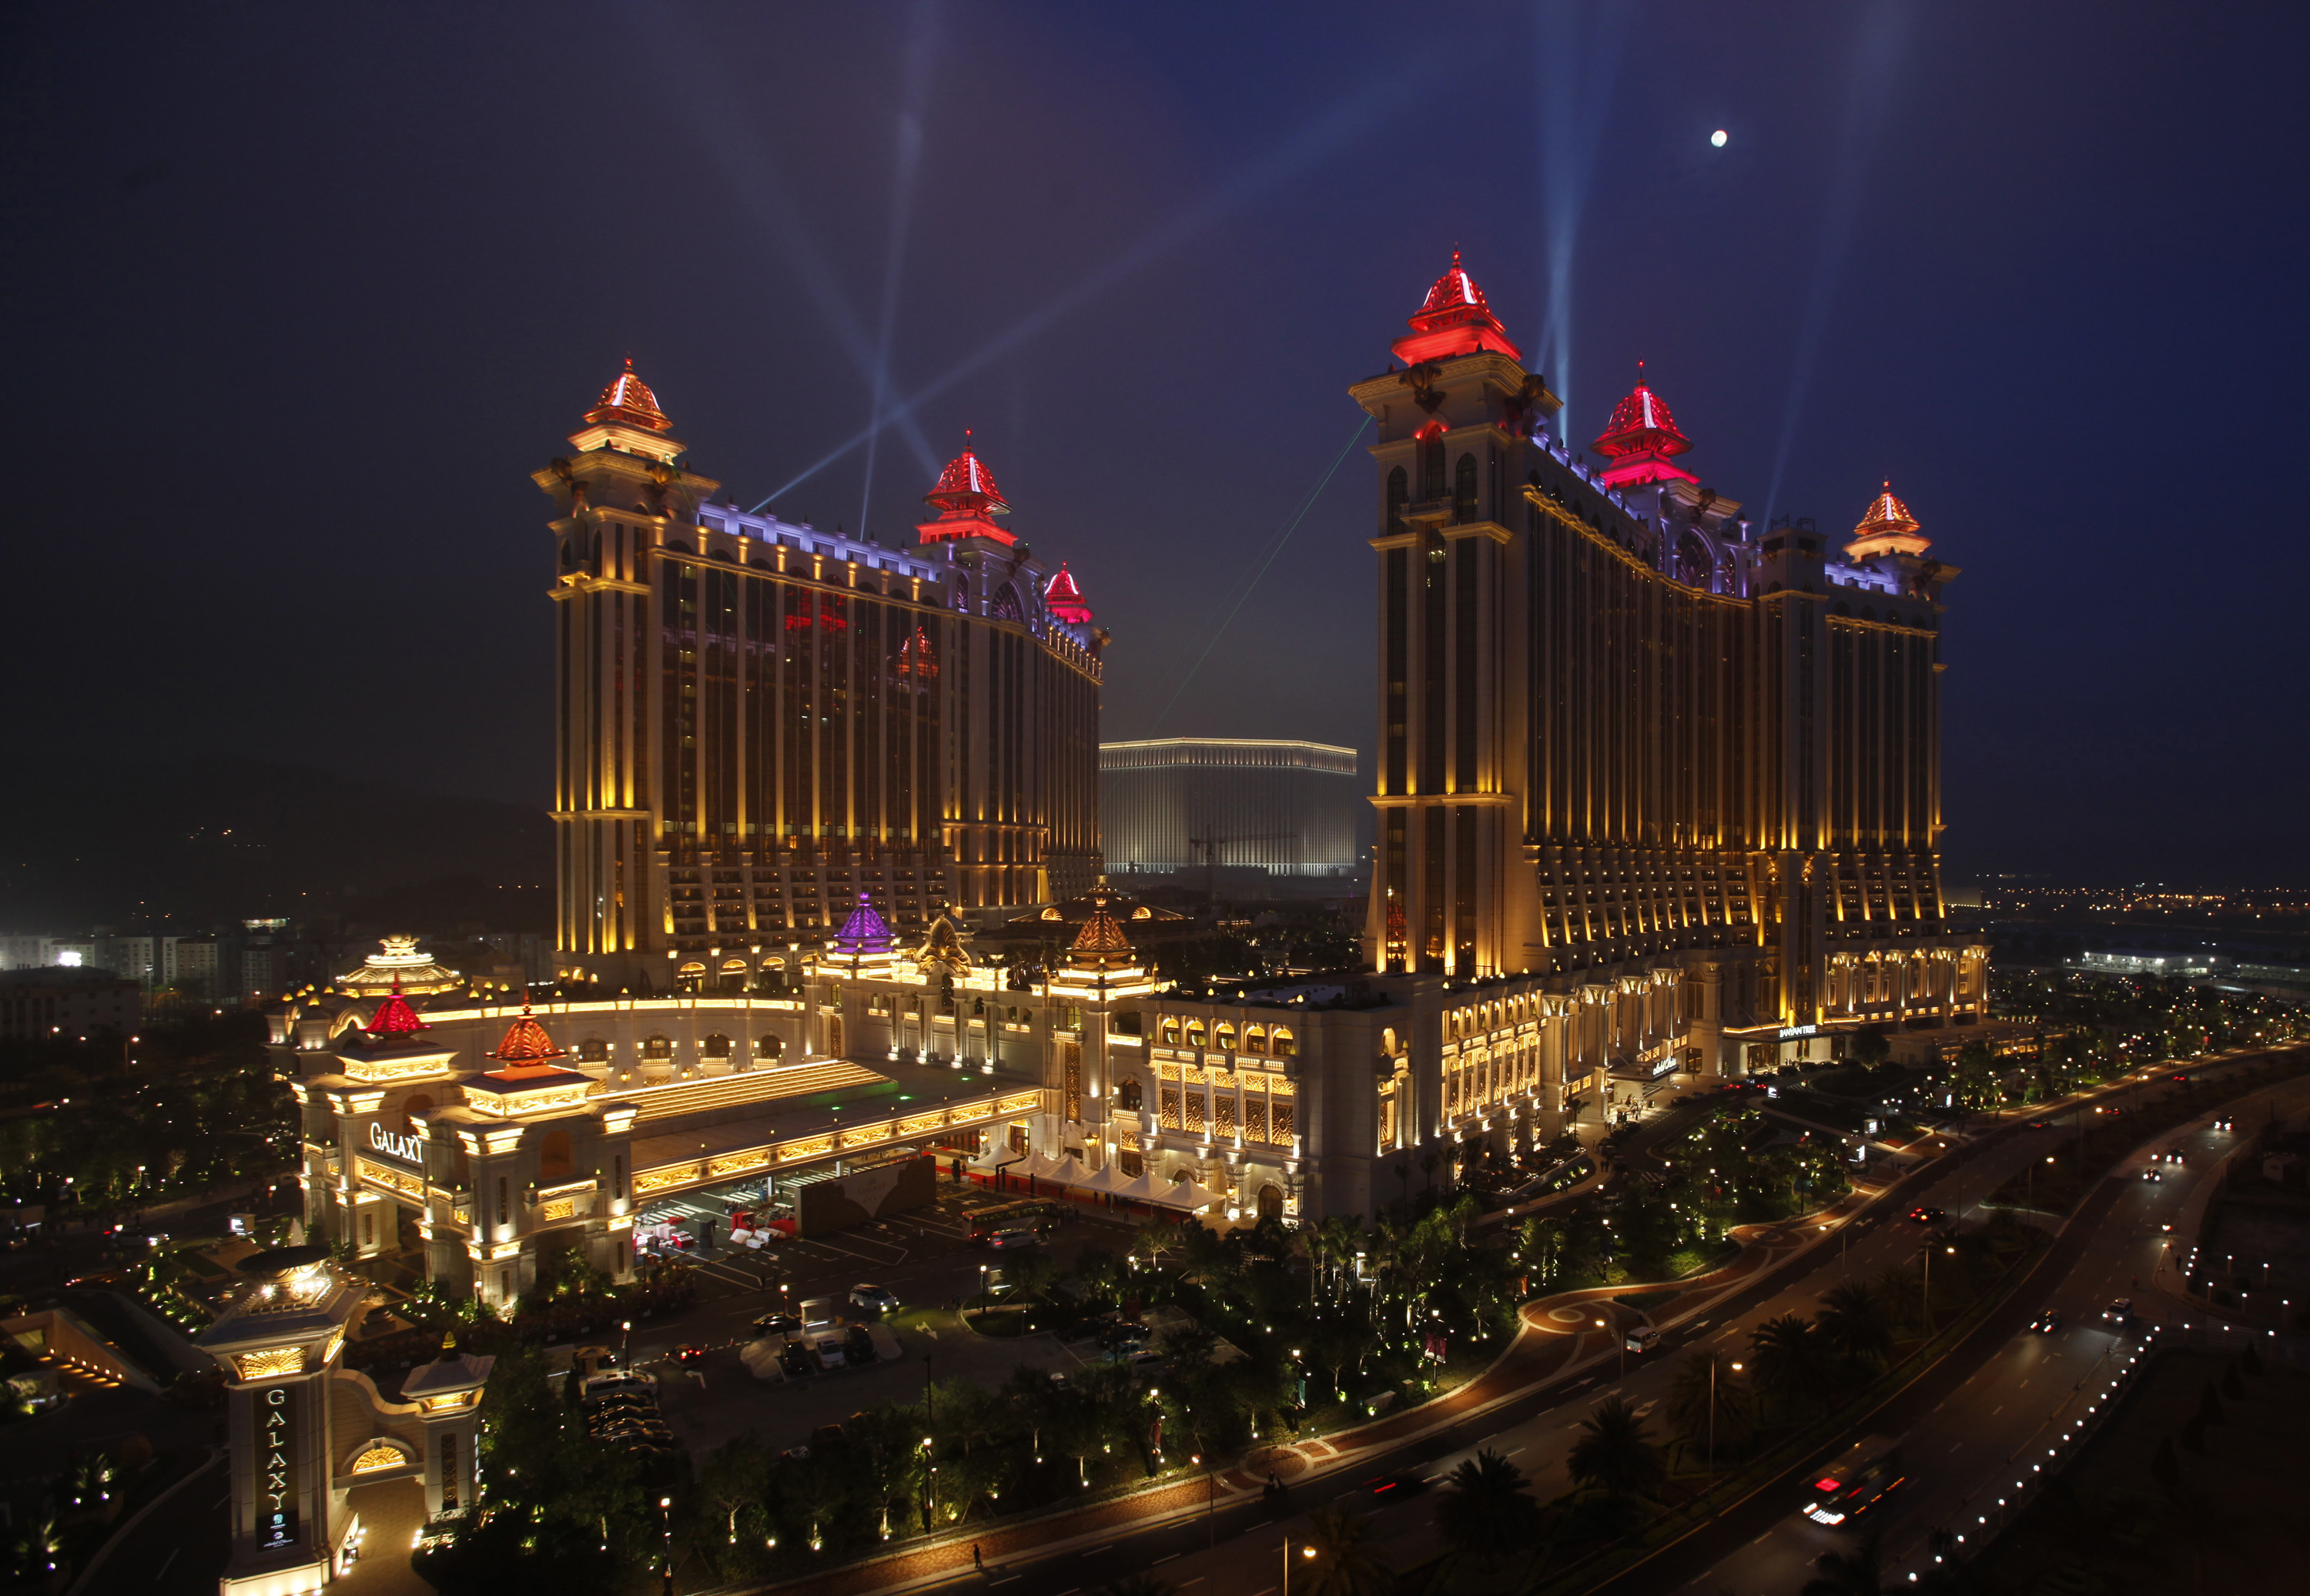 Macau gaming names slide on money laundering probe. See Stockwinners.com Market Radar for the latest.